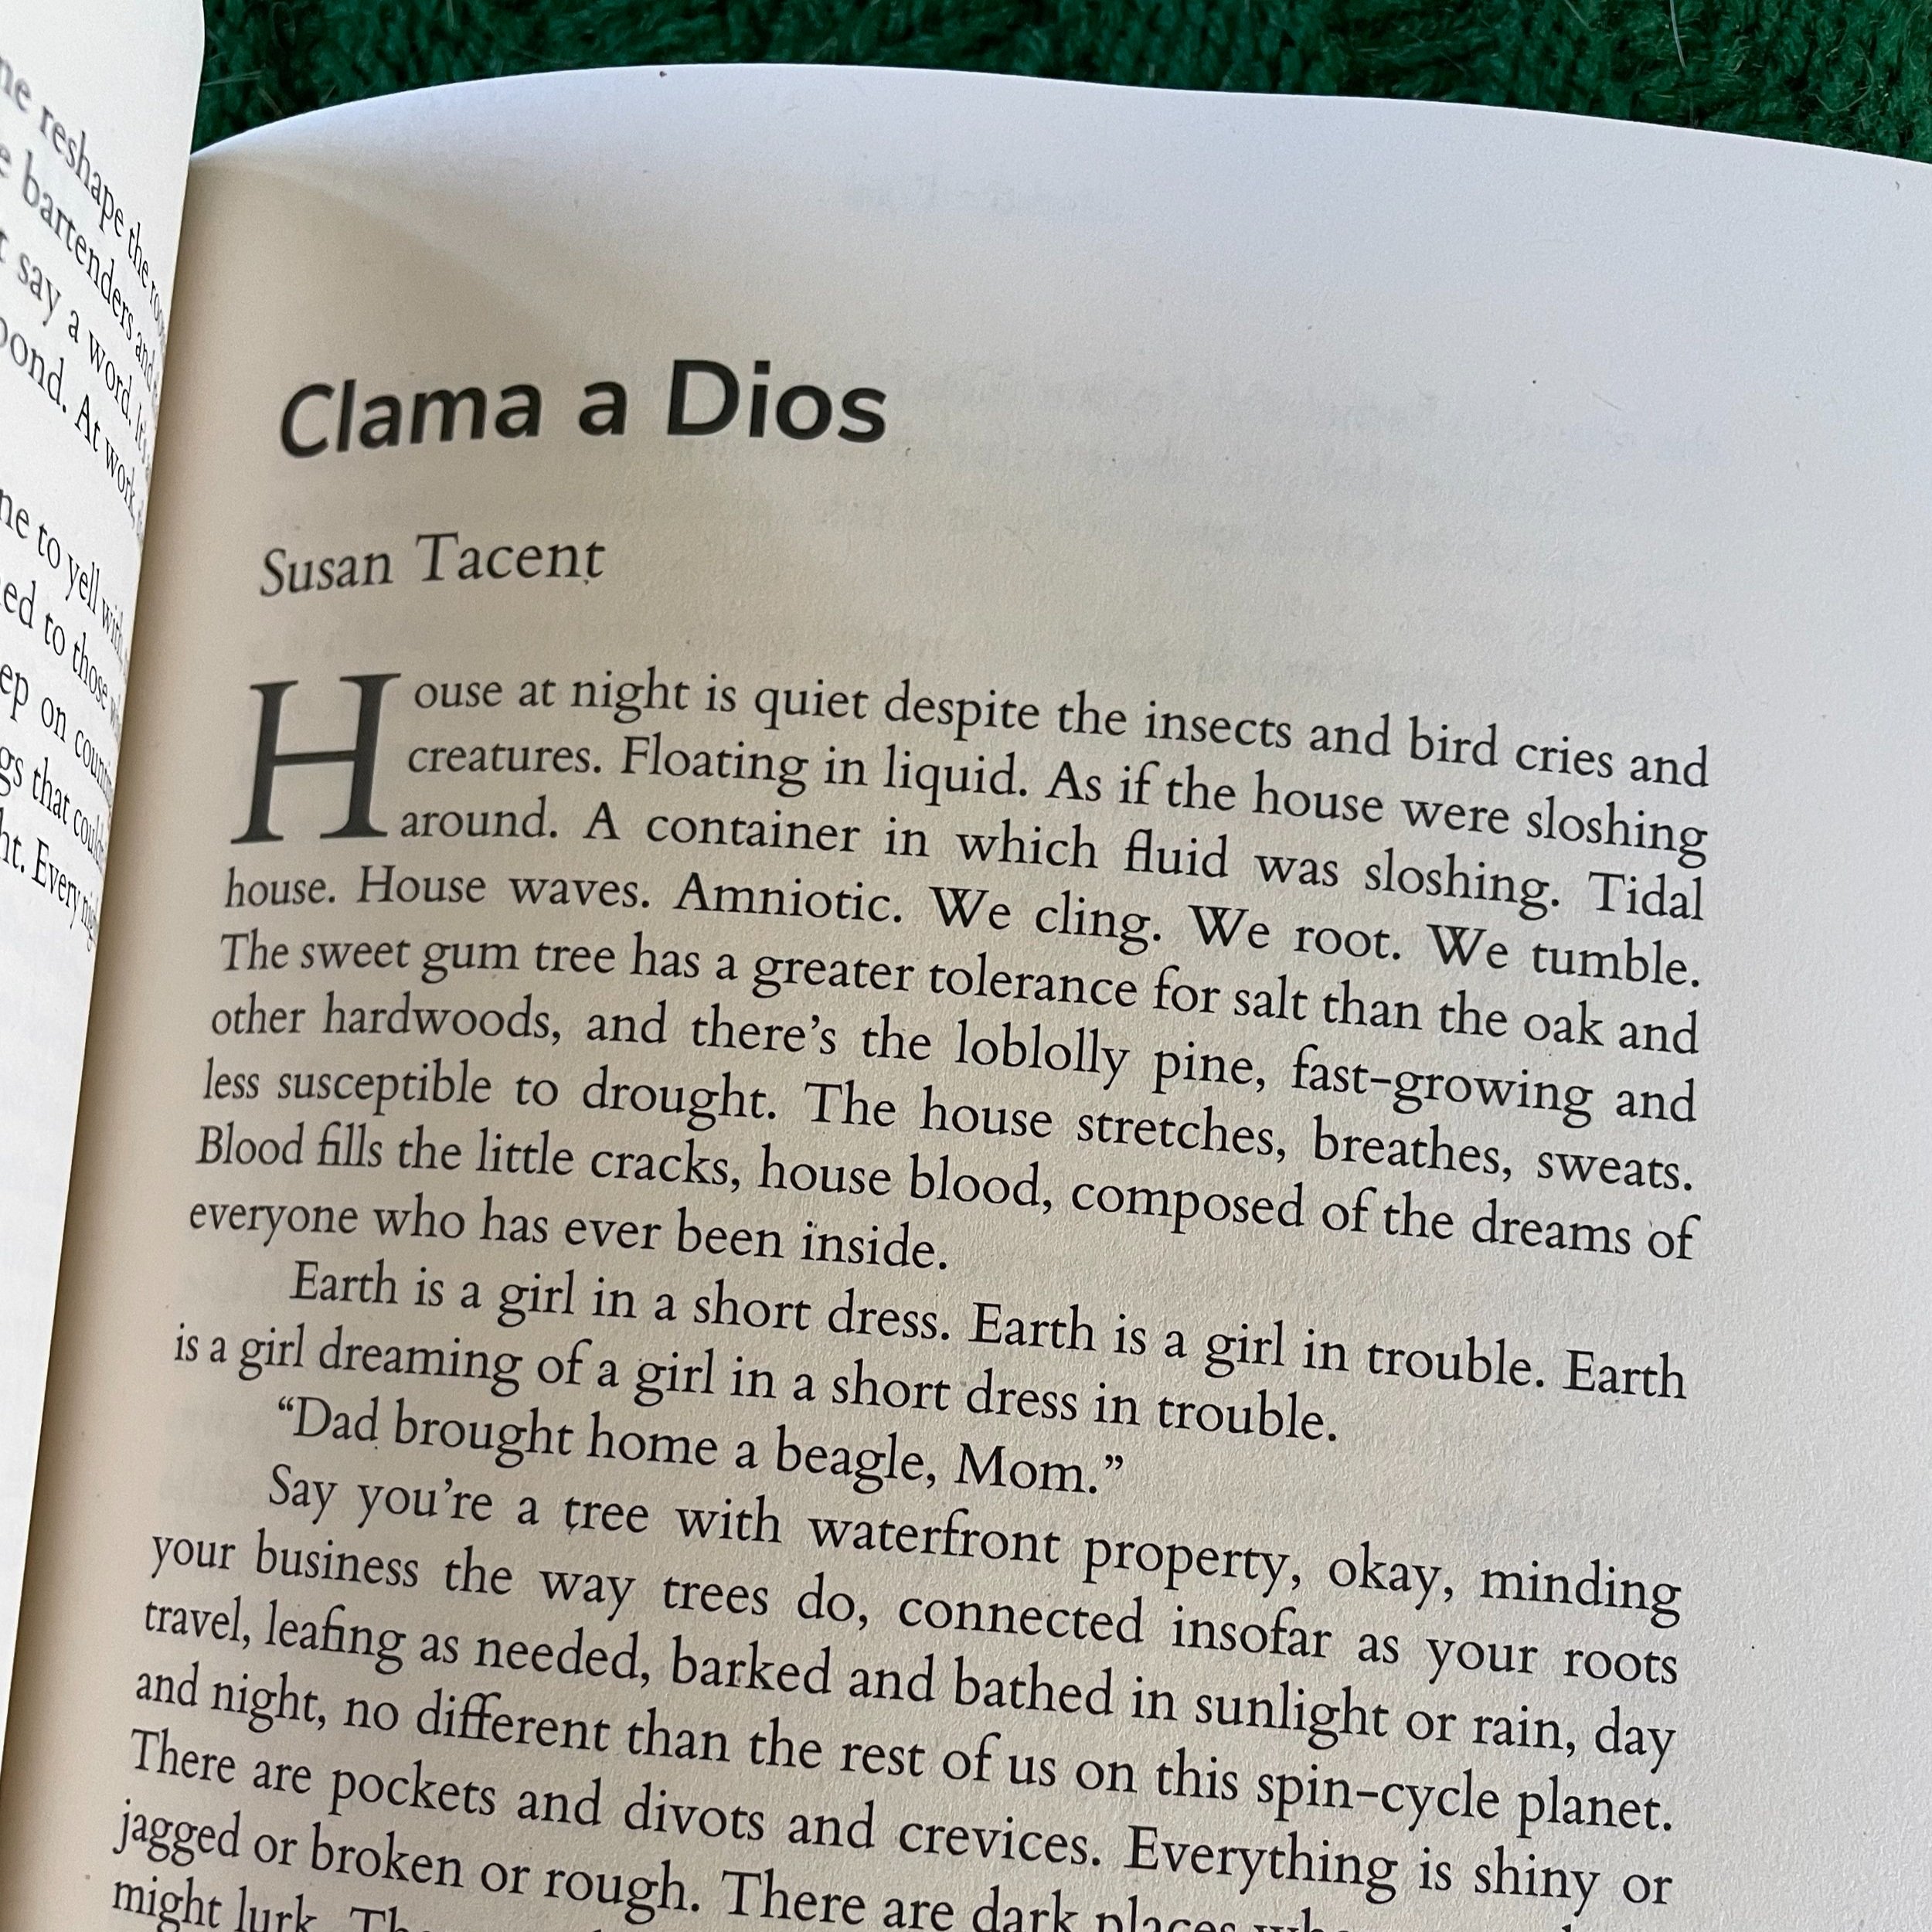  Clama a Dios by Susan Tacent,  Reckoning #6 January 2022   reckoning.press/  